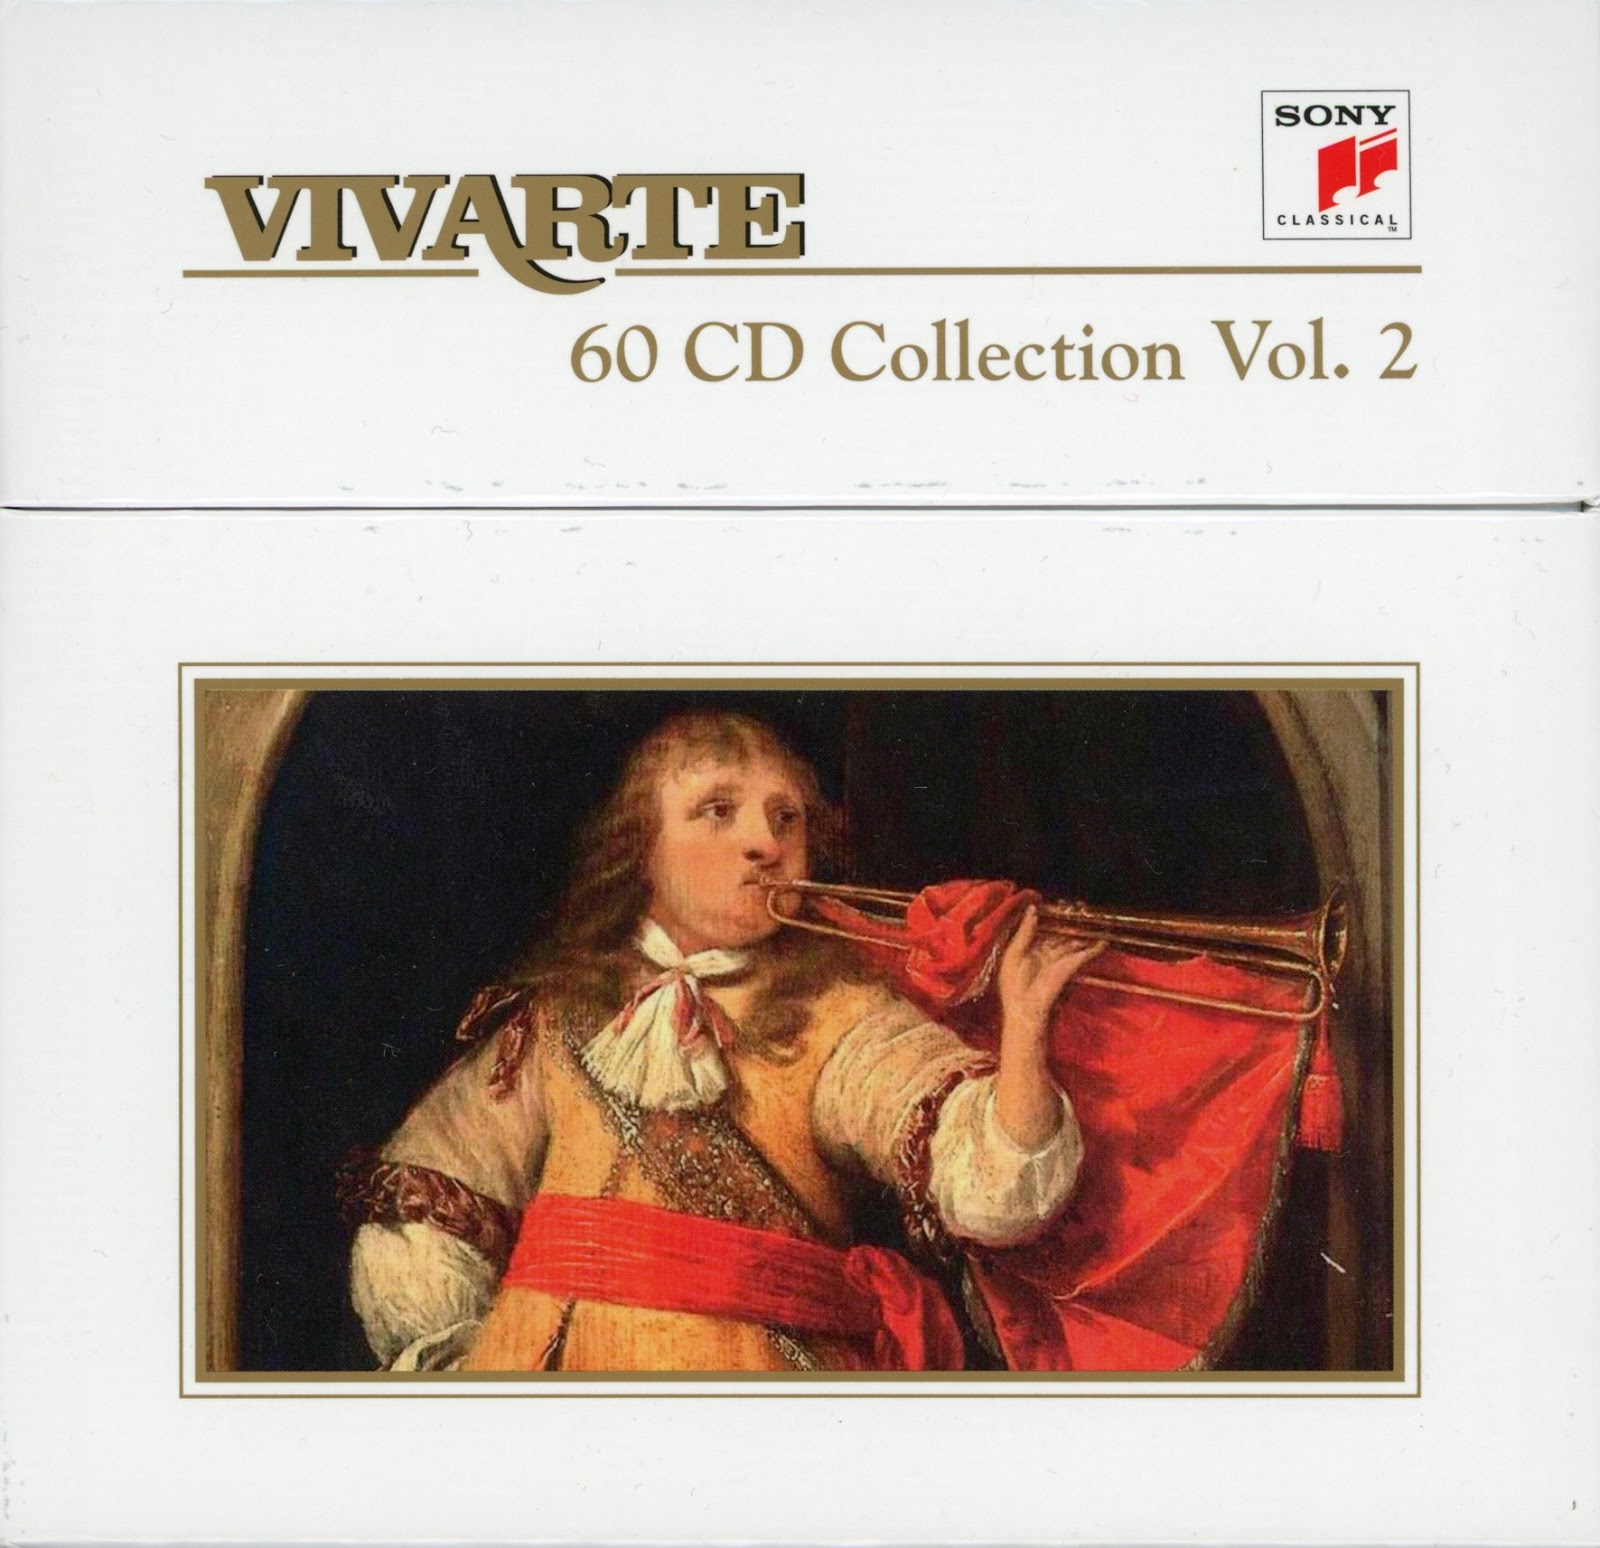 makdelart - classique: SONY VIVARTE Vol. 2 - 60 CD COLLECTION 